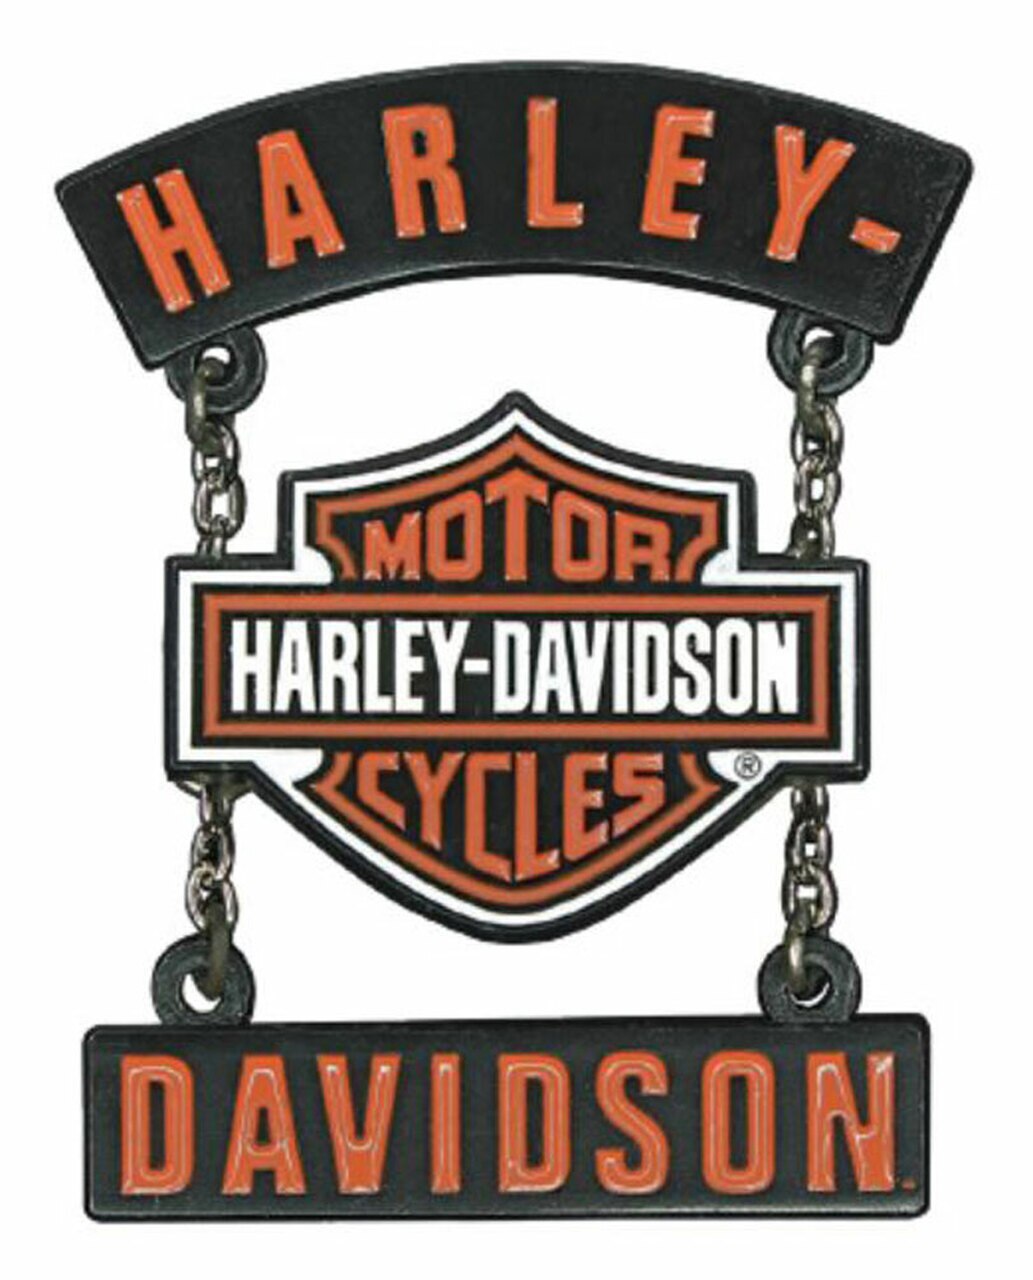 Harley davidson pin code